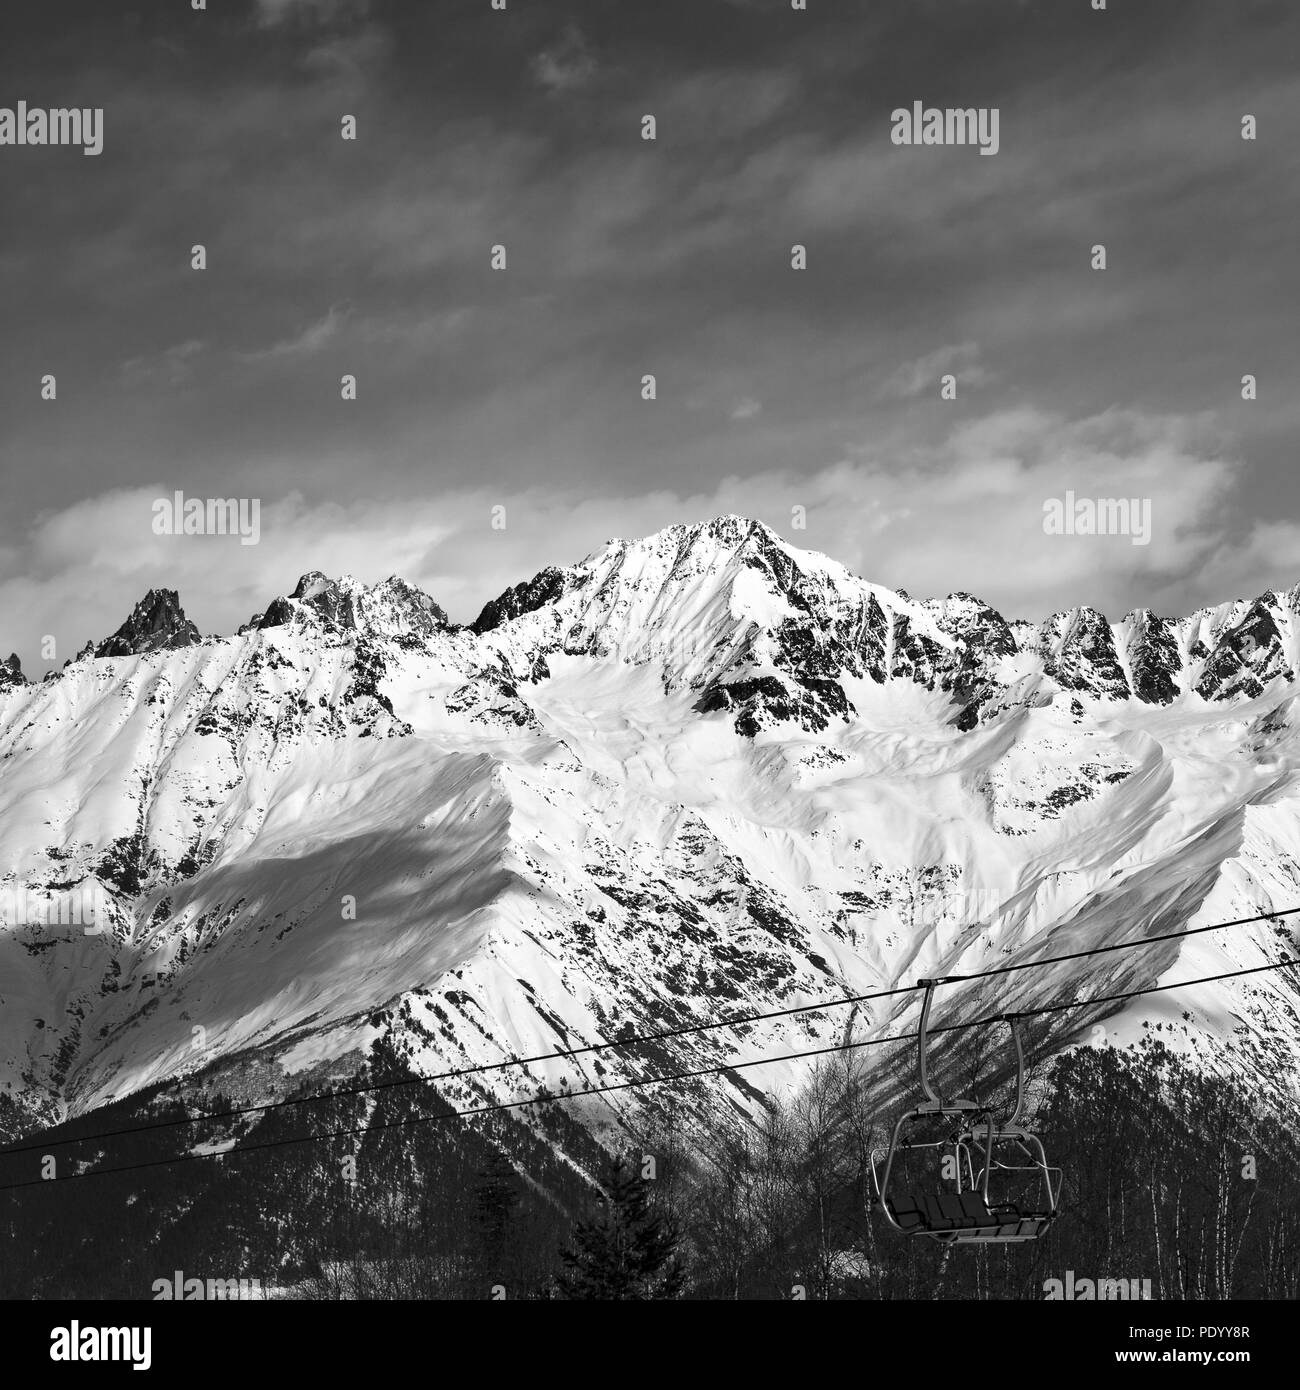 Black and white ski lift in snow mountains at nice winter day. Caucasus Mountains. Hatsvali, Svaneti region of Georgia. Square image. Stock Photo